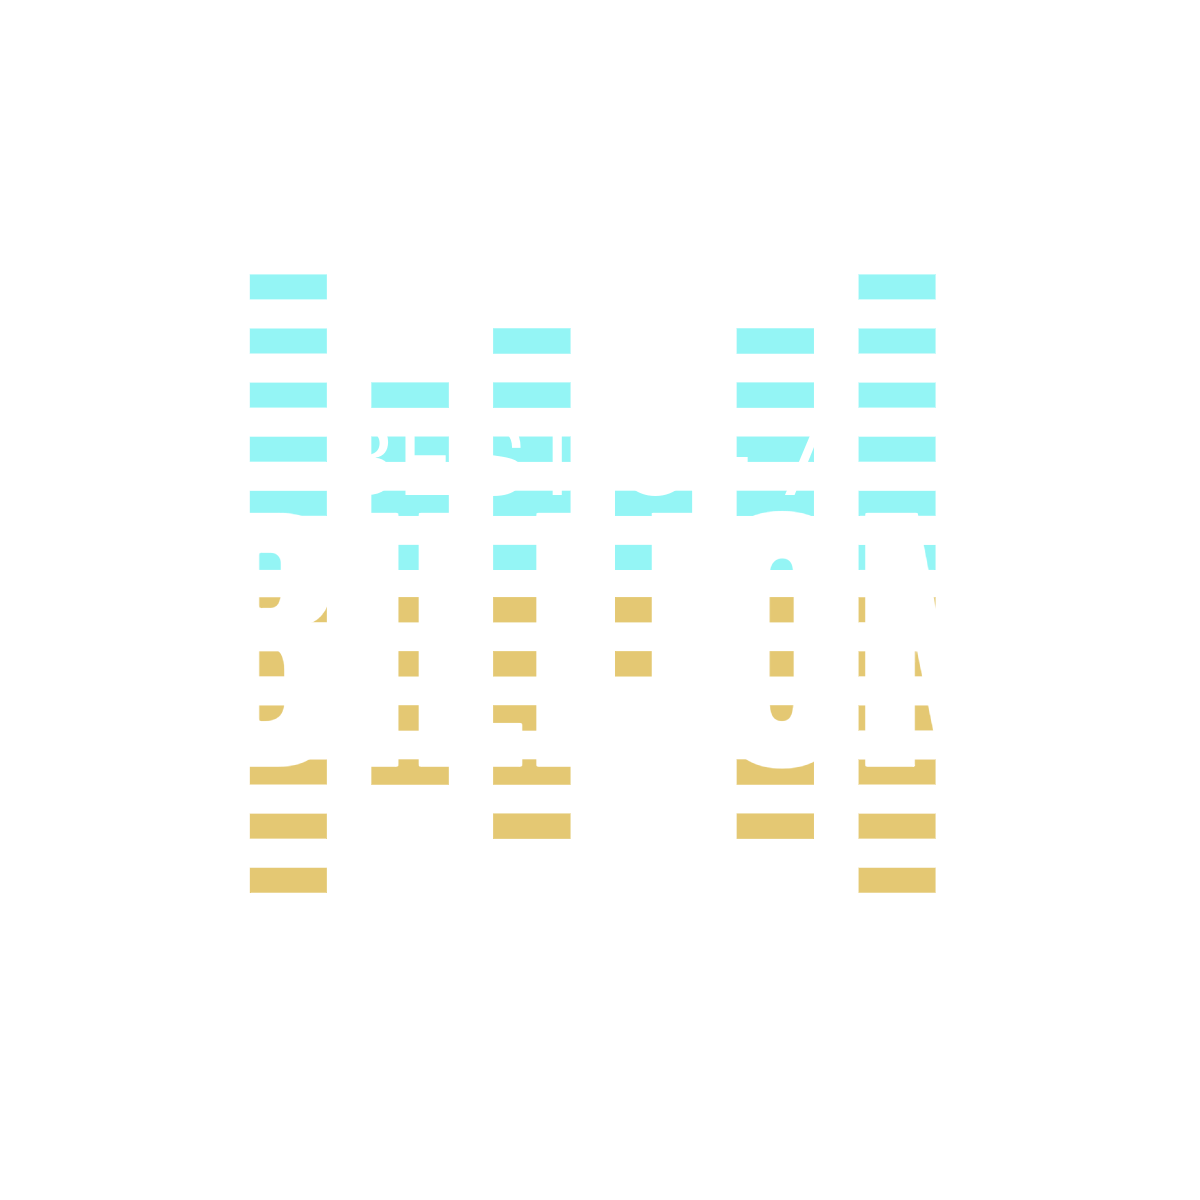 Best of a Billion